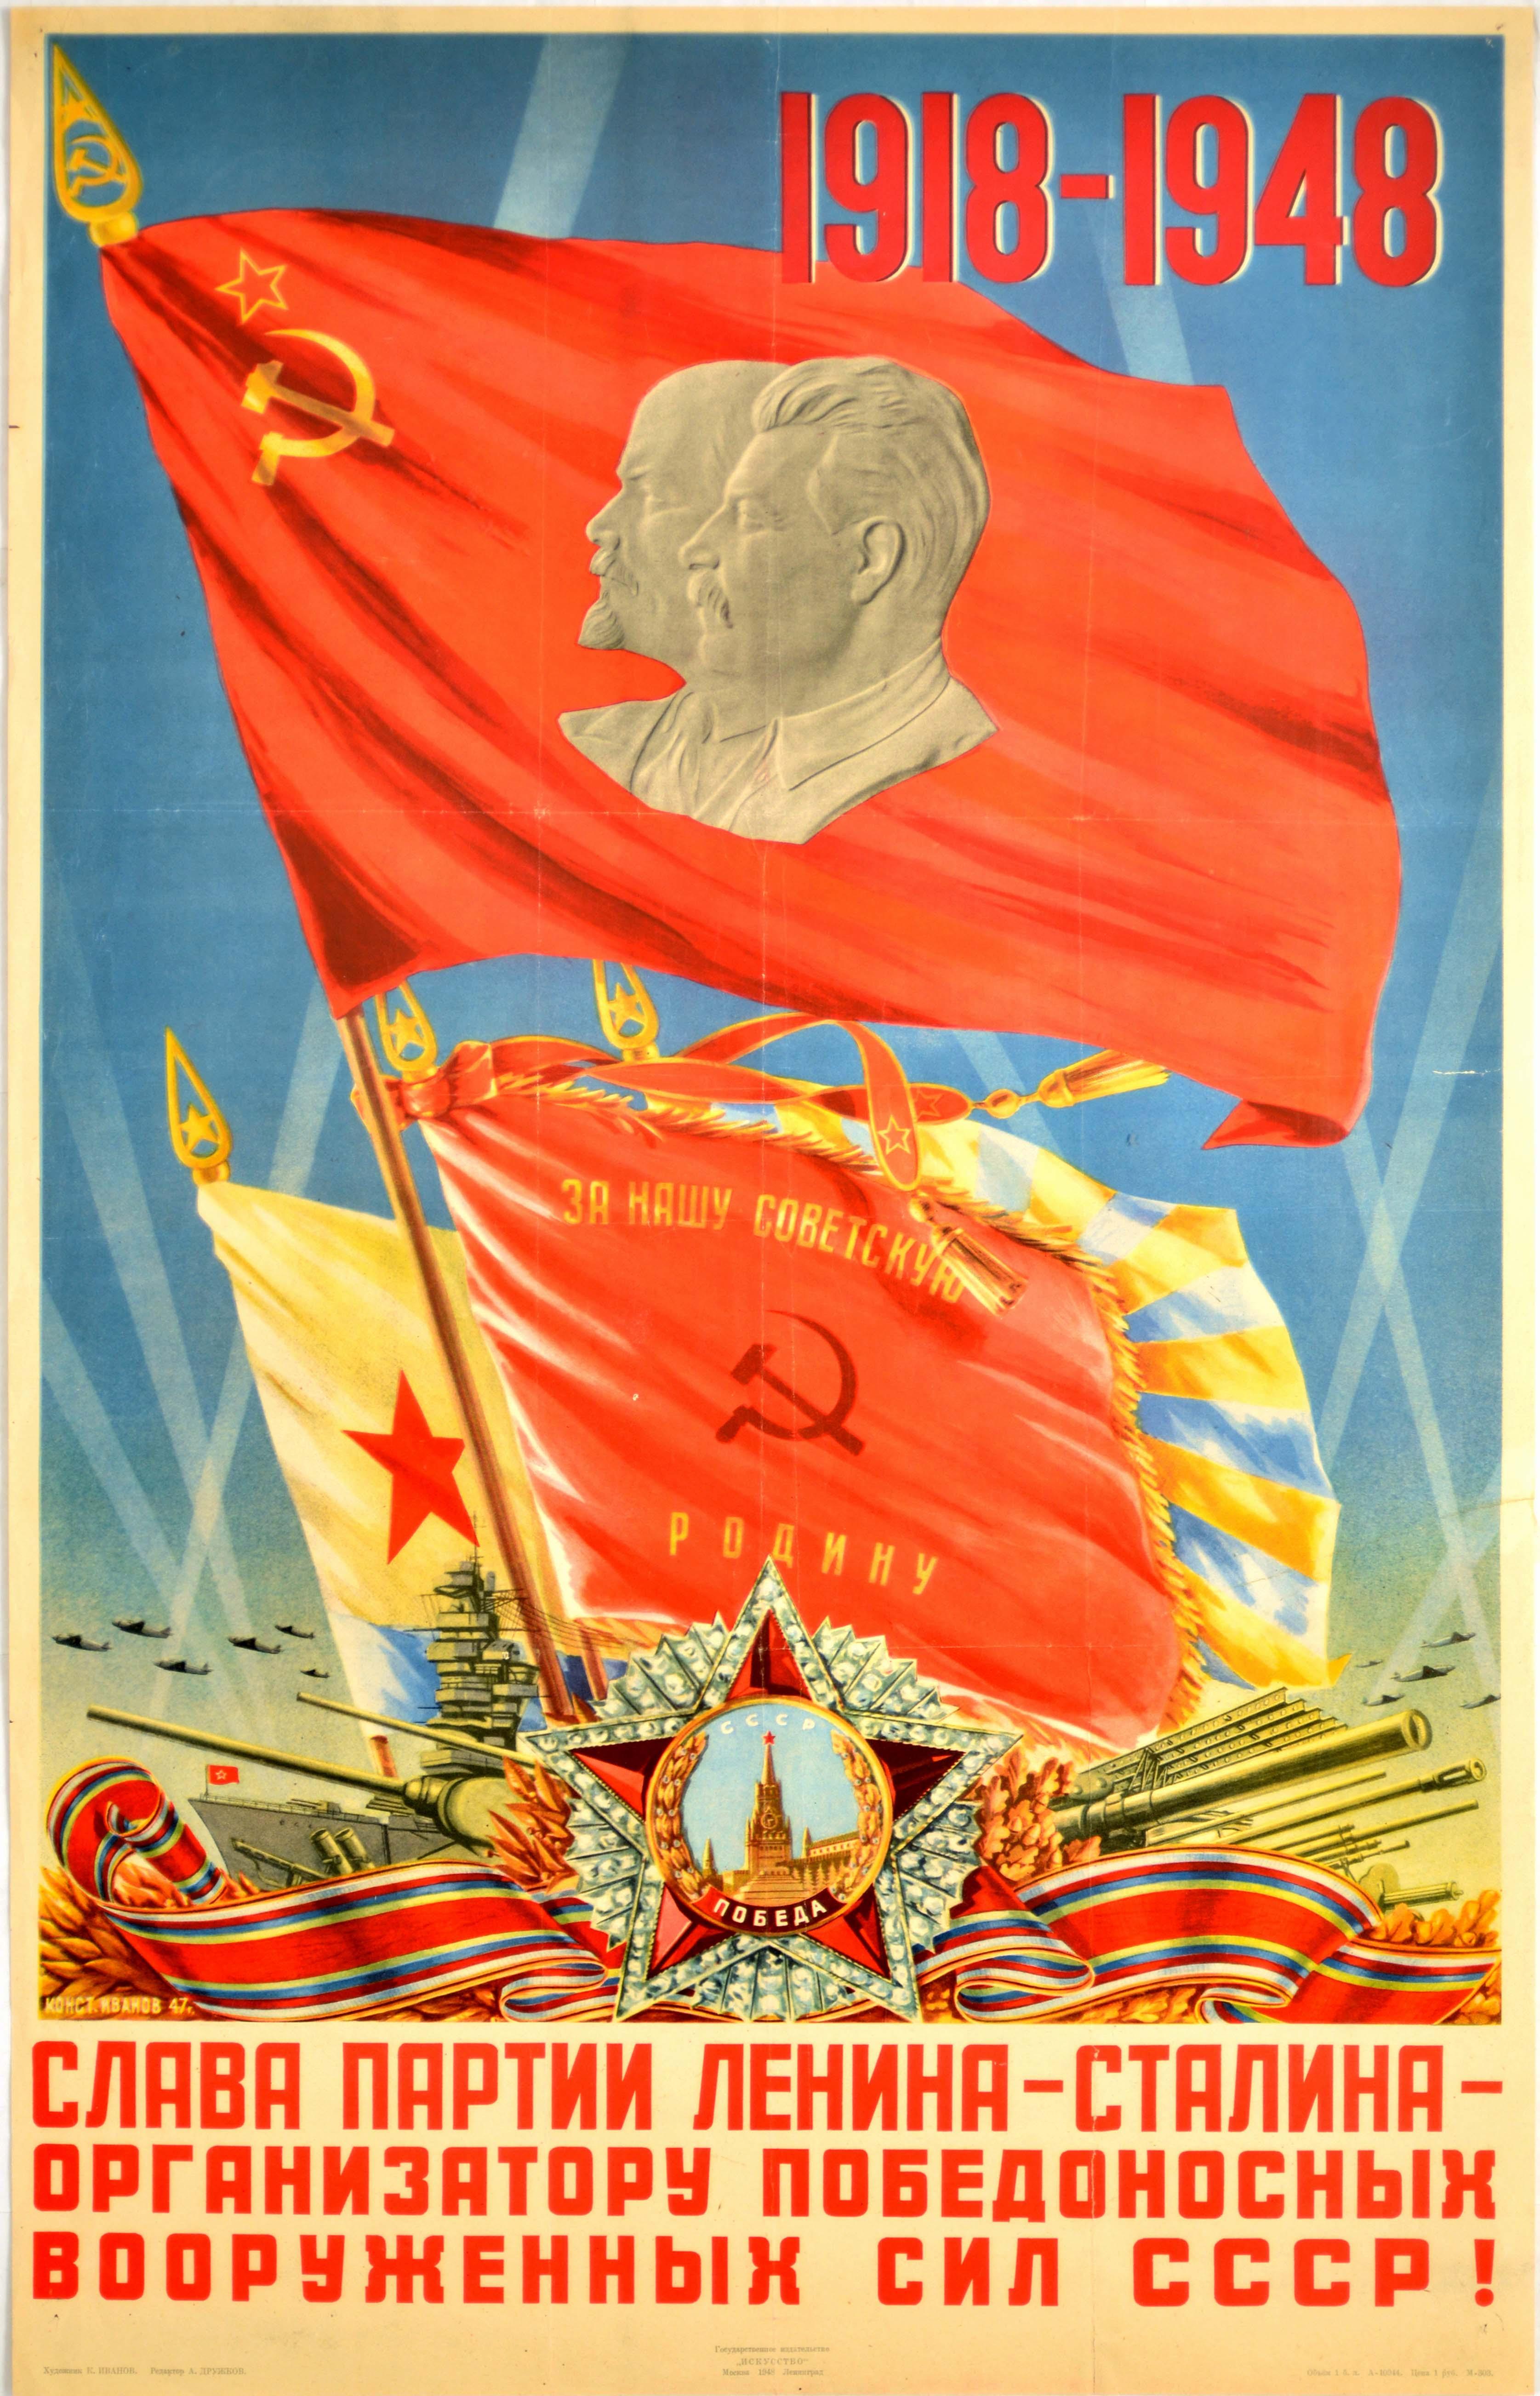 K. Ivanov Print - Original Vintage Soviet Propaganda Poster Glory To The Party Lenin Stalin USSR